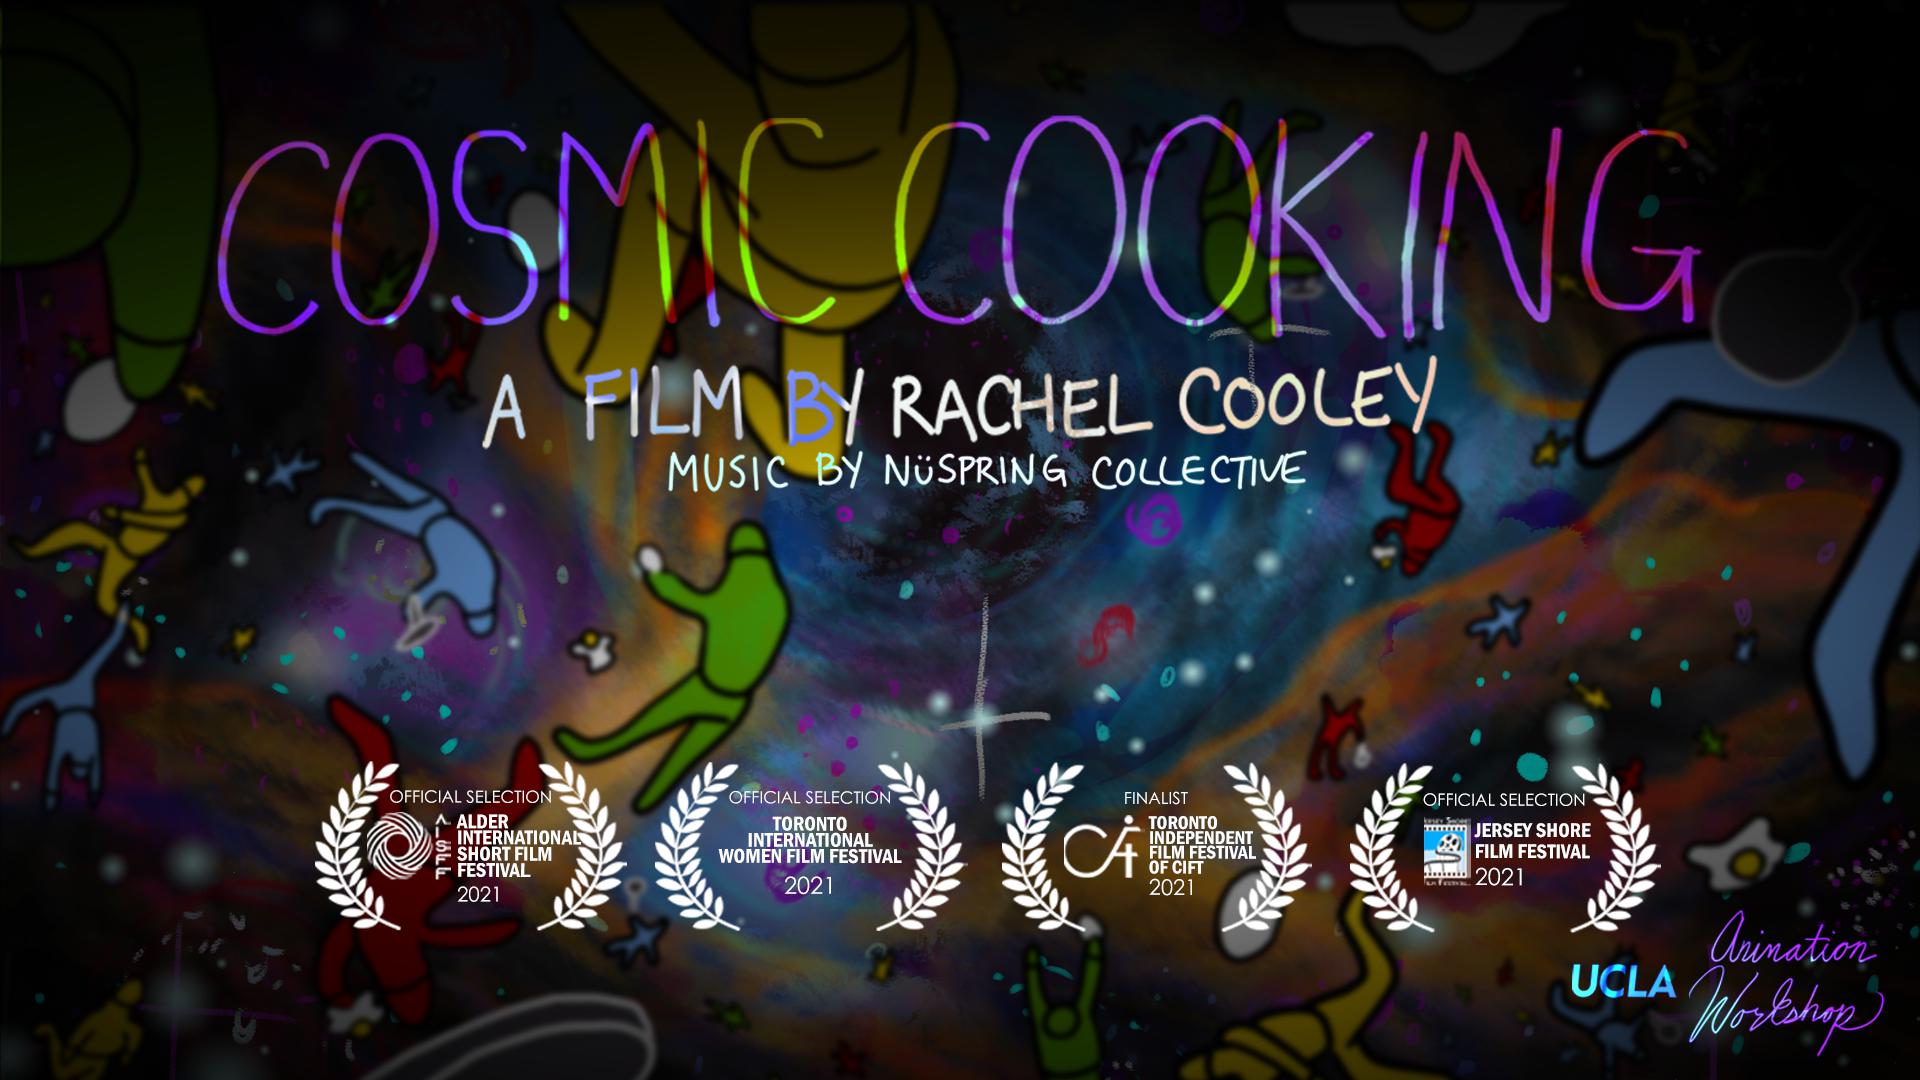 Cosmic Cooking